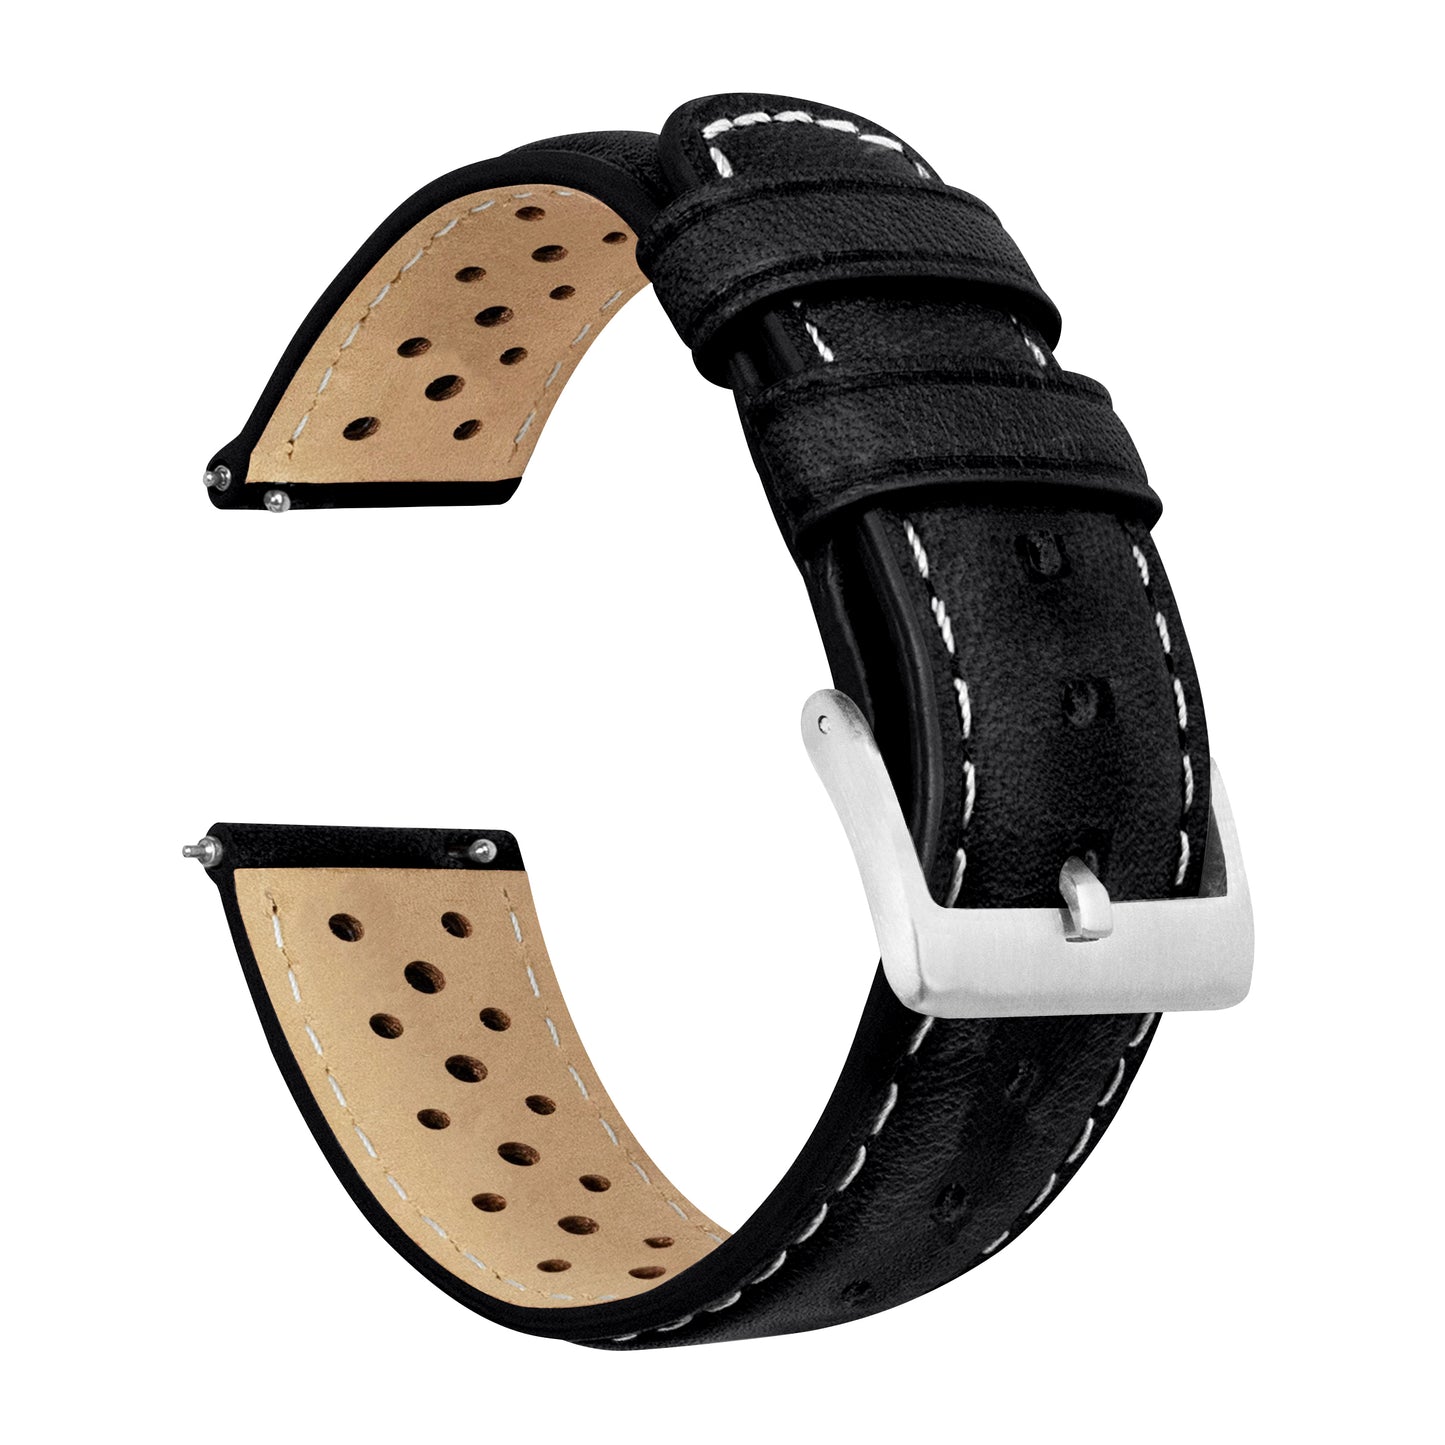 Huwawei Watch Racing Horween Leather Black Linen Stitch Watch Band